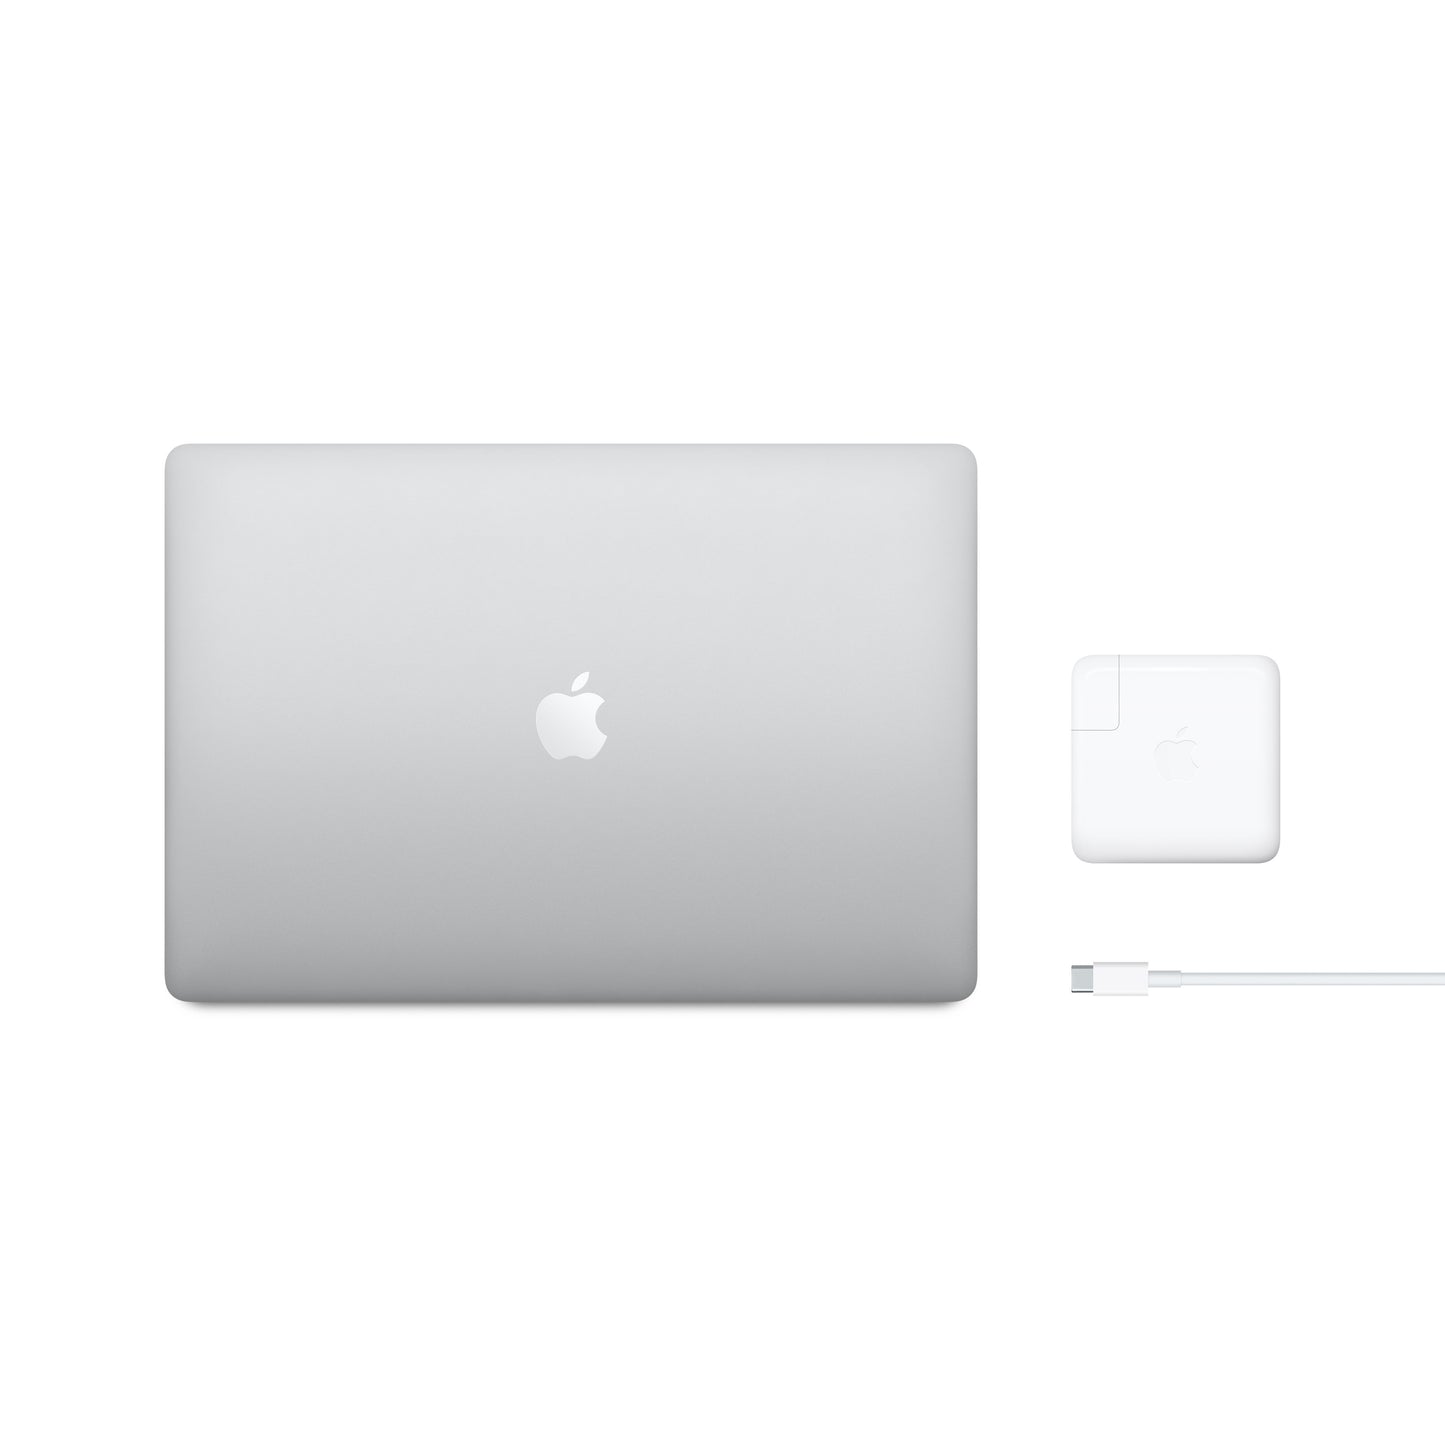 16-inch MacBook Pro 2.6GHz 6-core 9th-Gen Intel Core i7, 512GB - 16GB Ram Space Grey